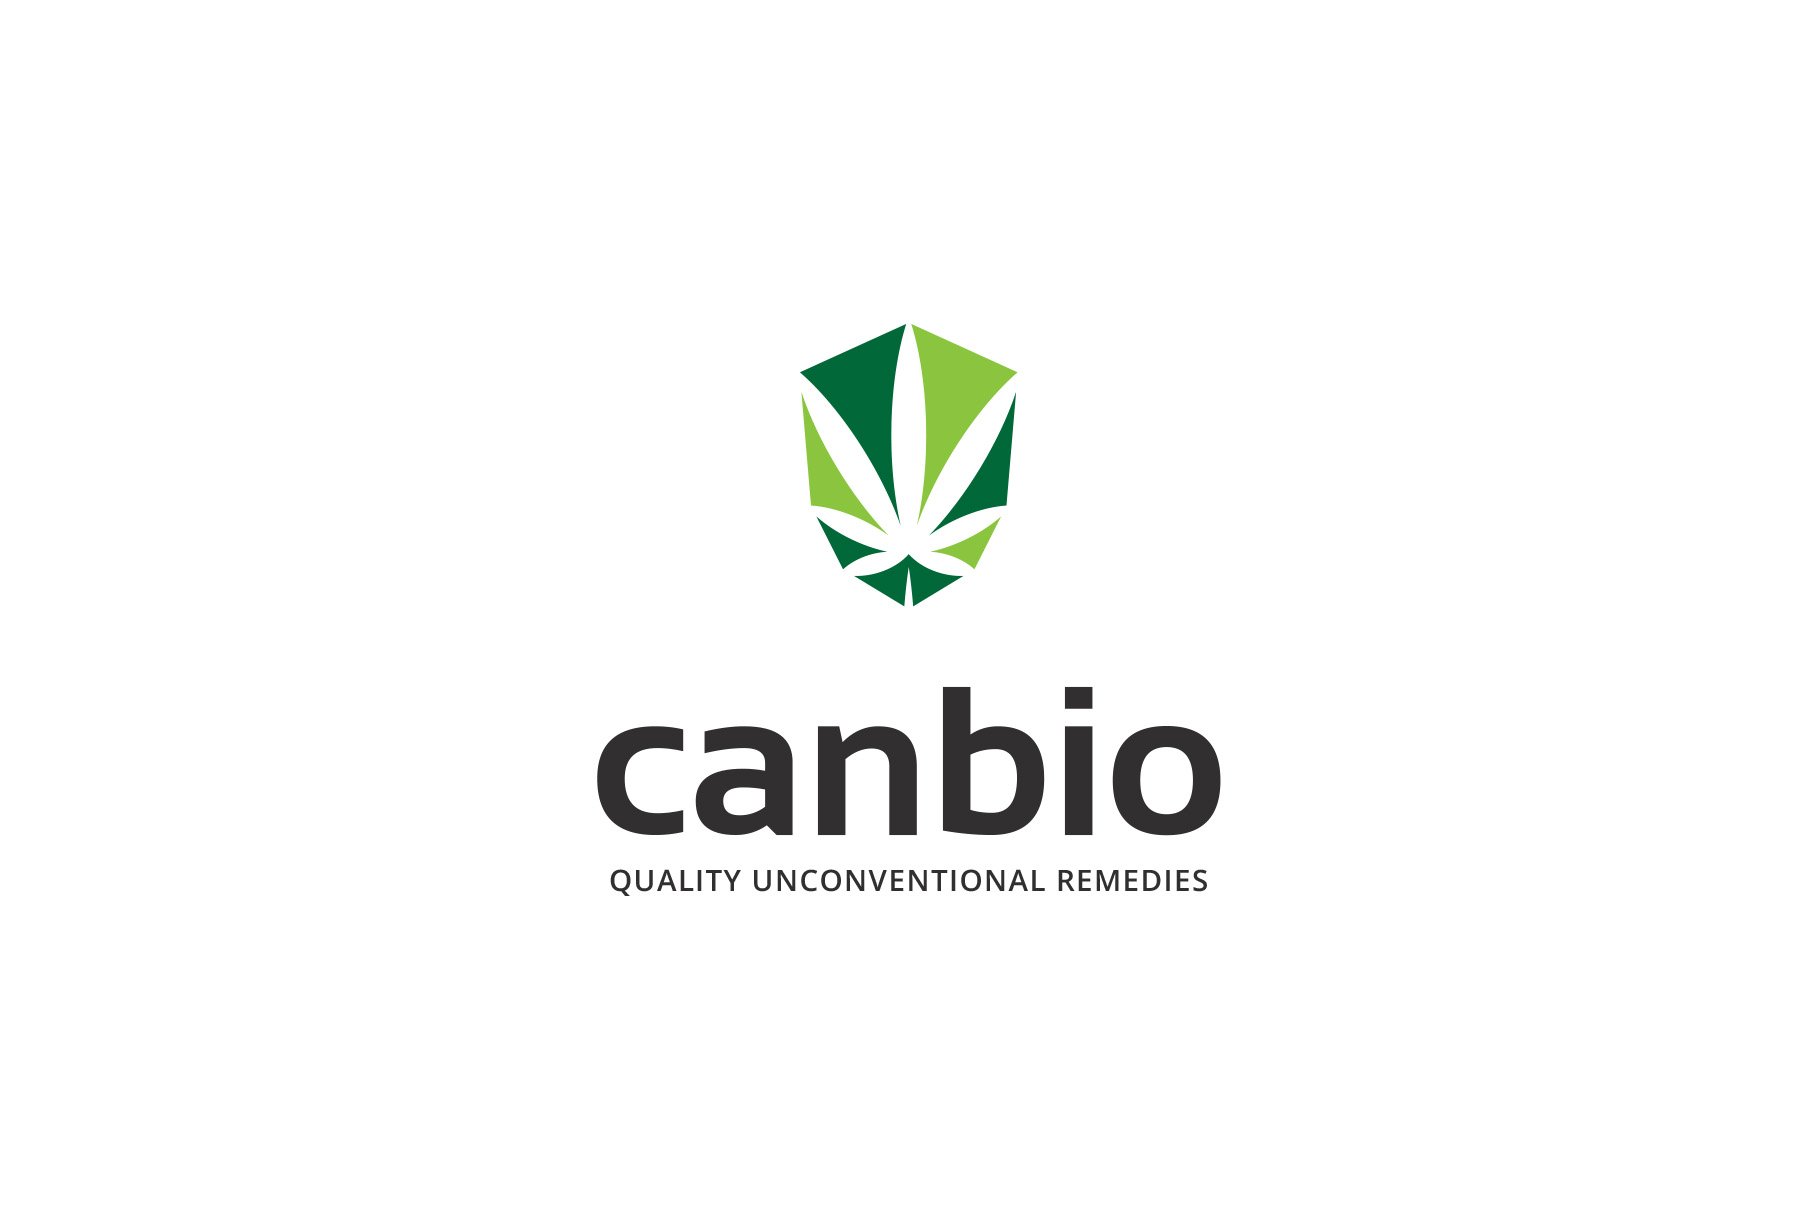 Cannabis Sativa Hemp Shield Logo cover image.